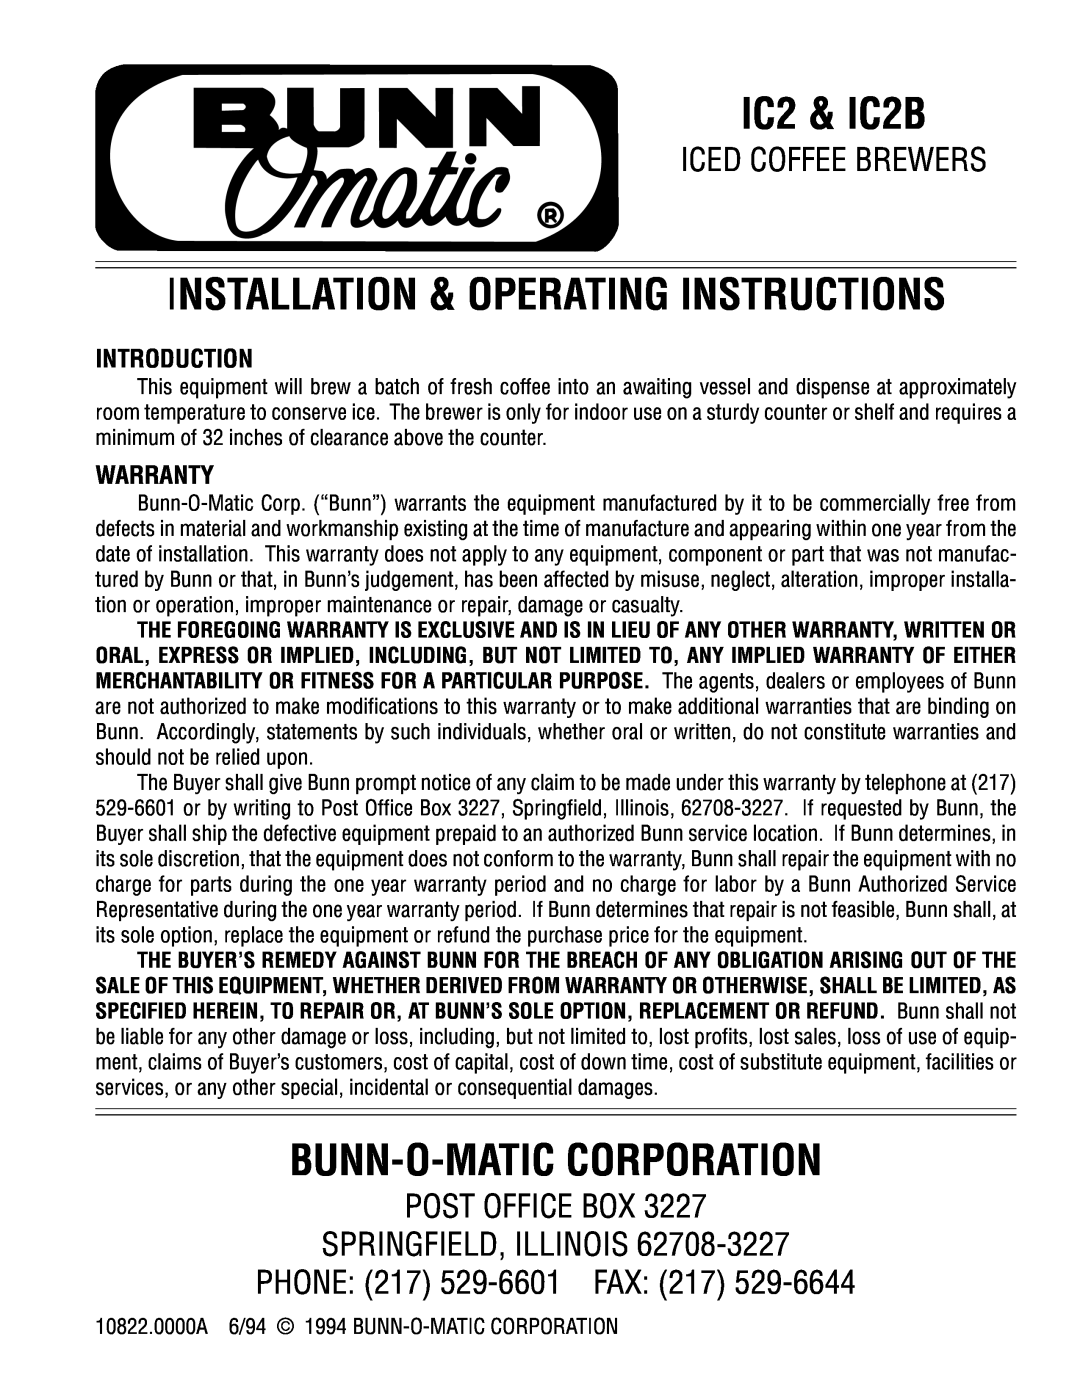 Bunn warranty Introduction, Warranty, IC2 & IC2B, Bunn-O-Matic Corporation, Installation & Operating Instructions 